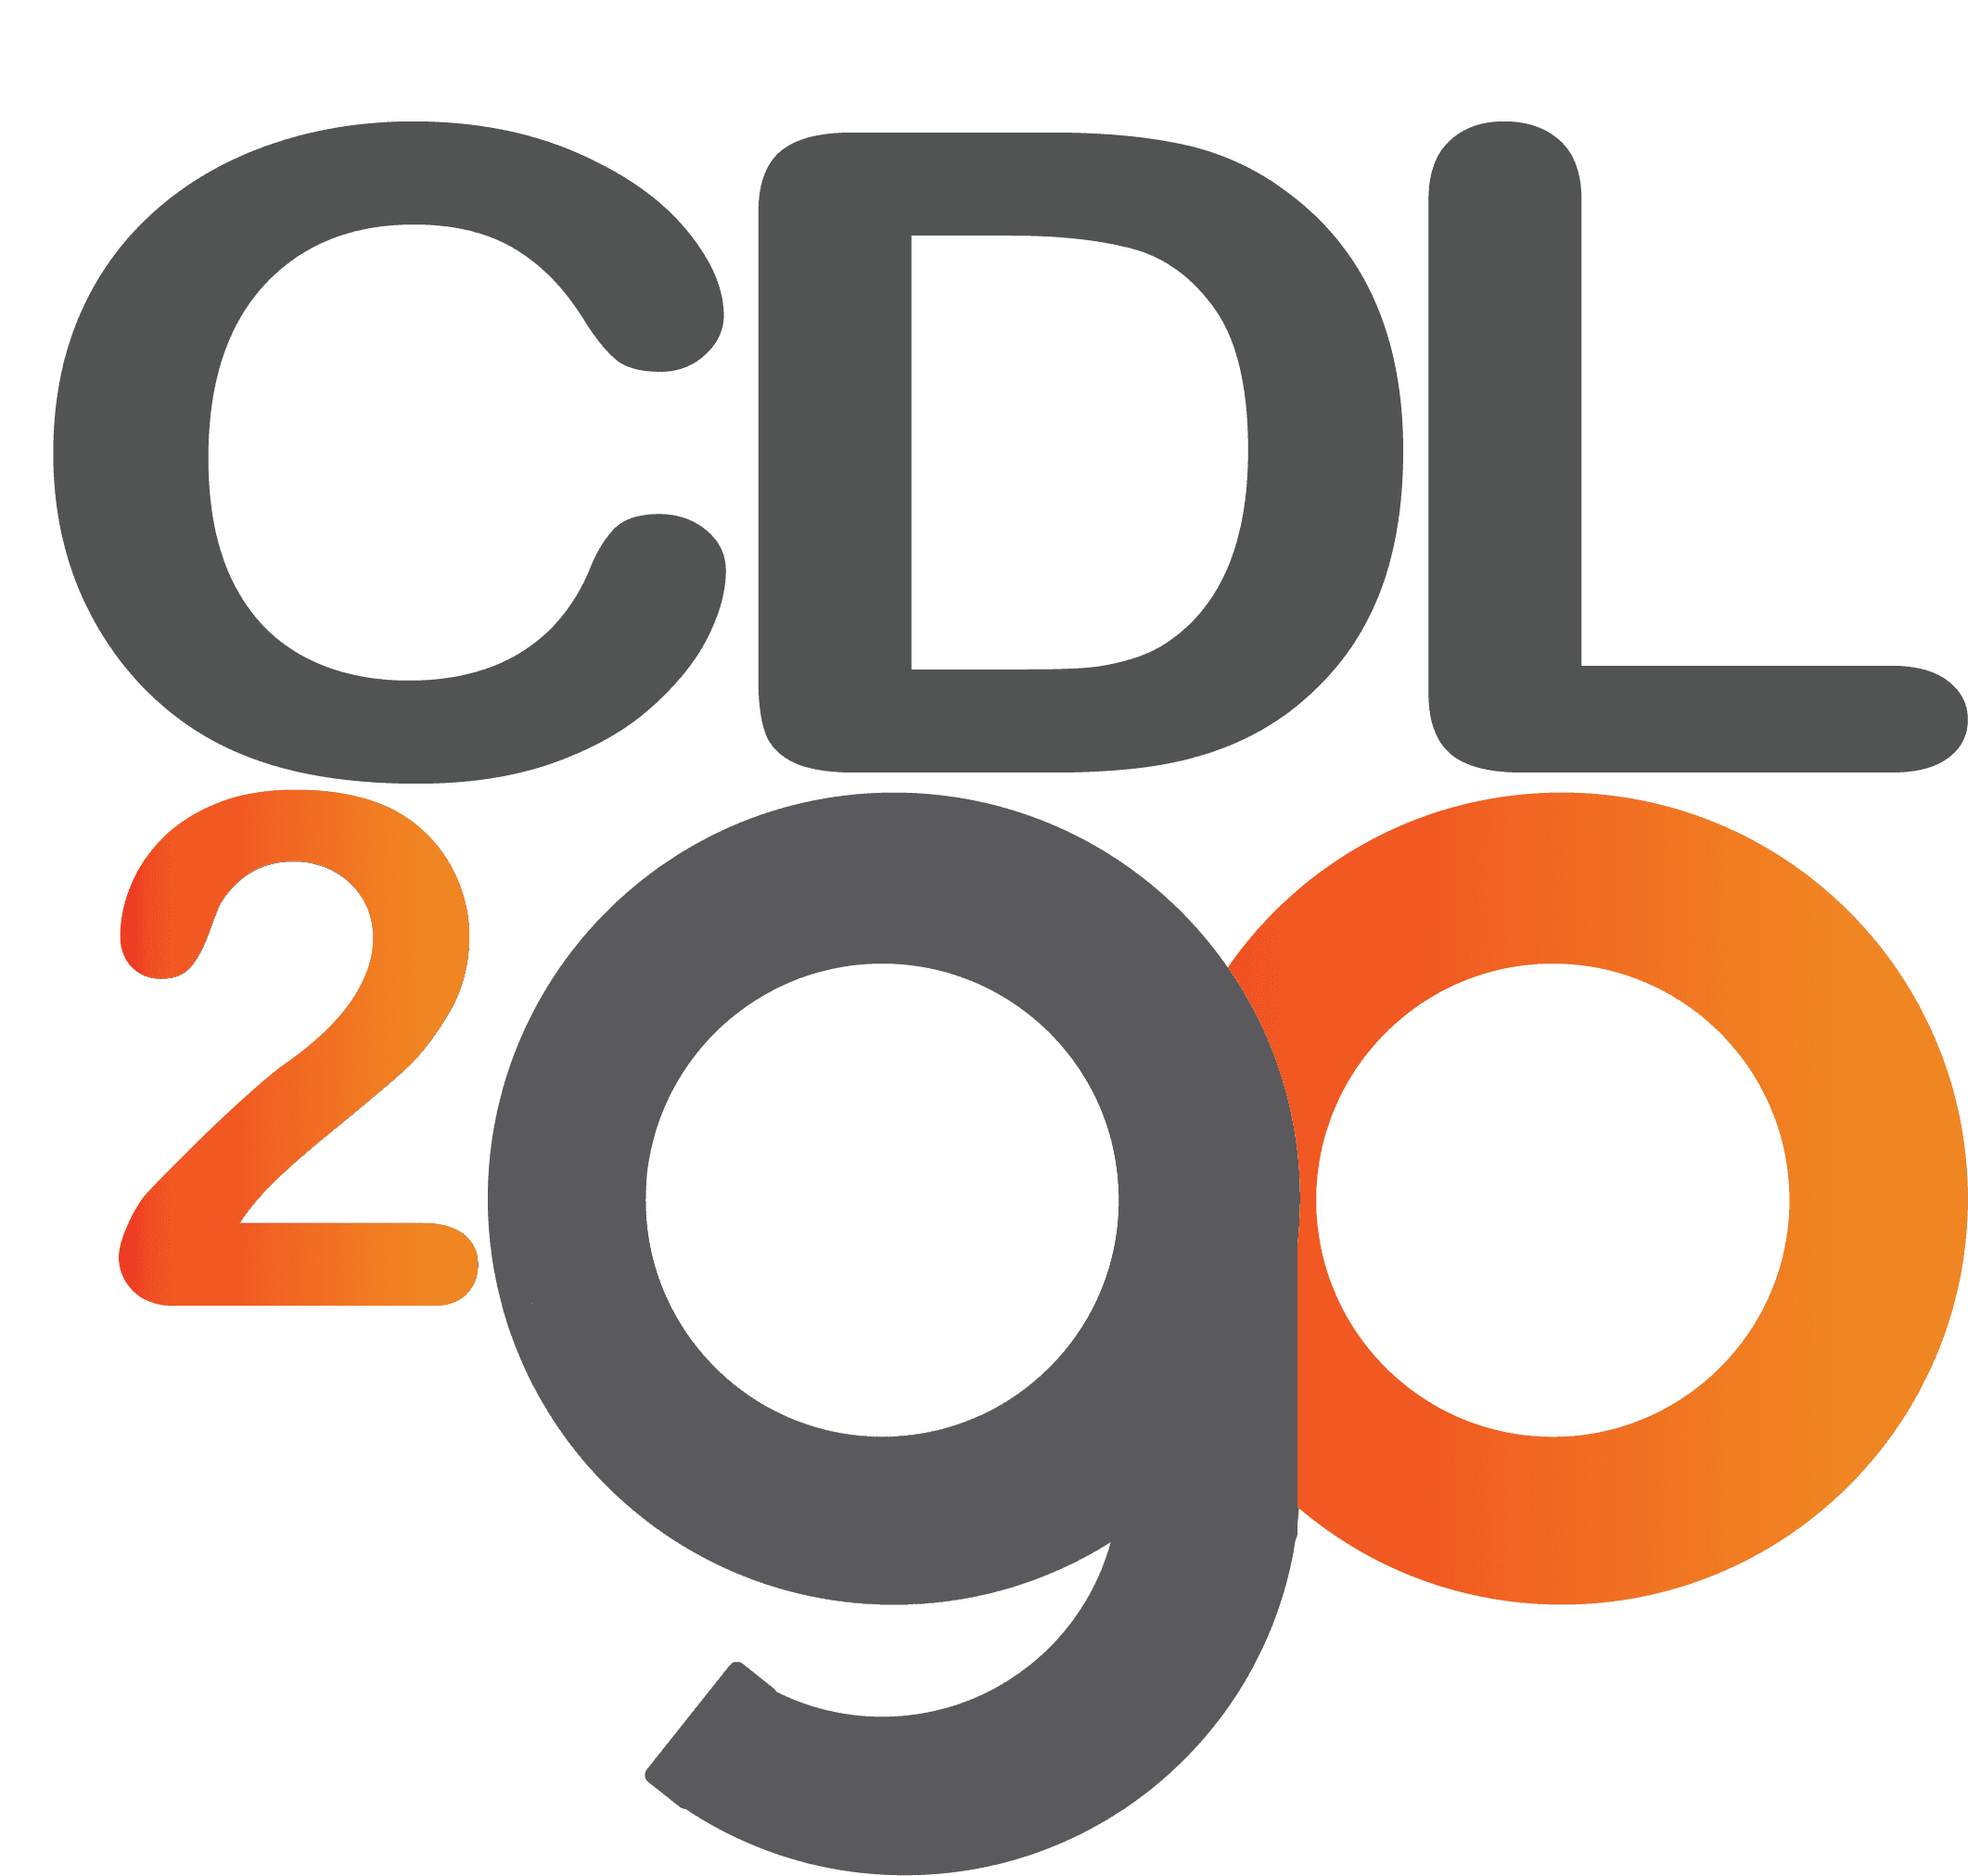 CDL2Go – ELDT B to A Theory Training